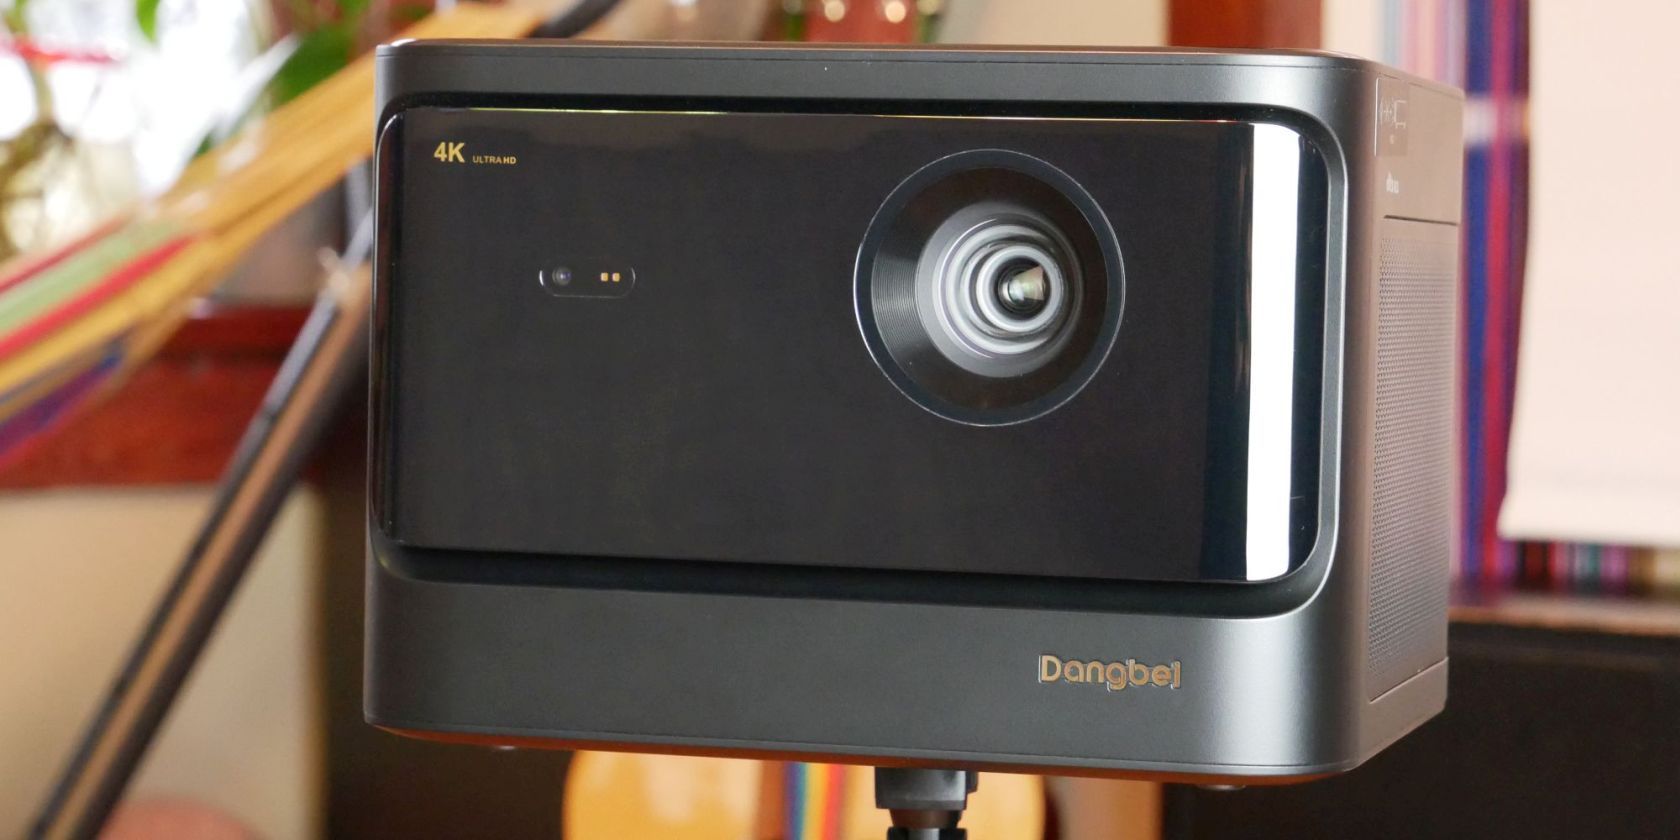 Dangbei Mars Pro 4K Laser Projector Review